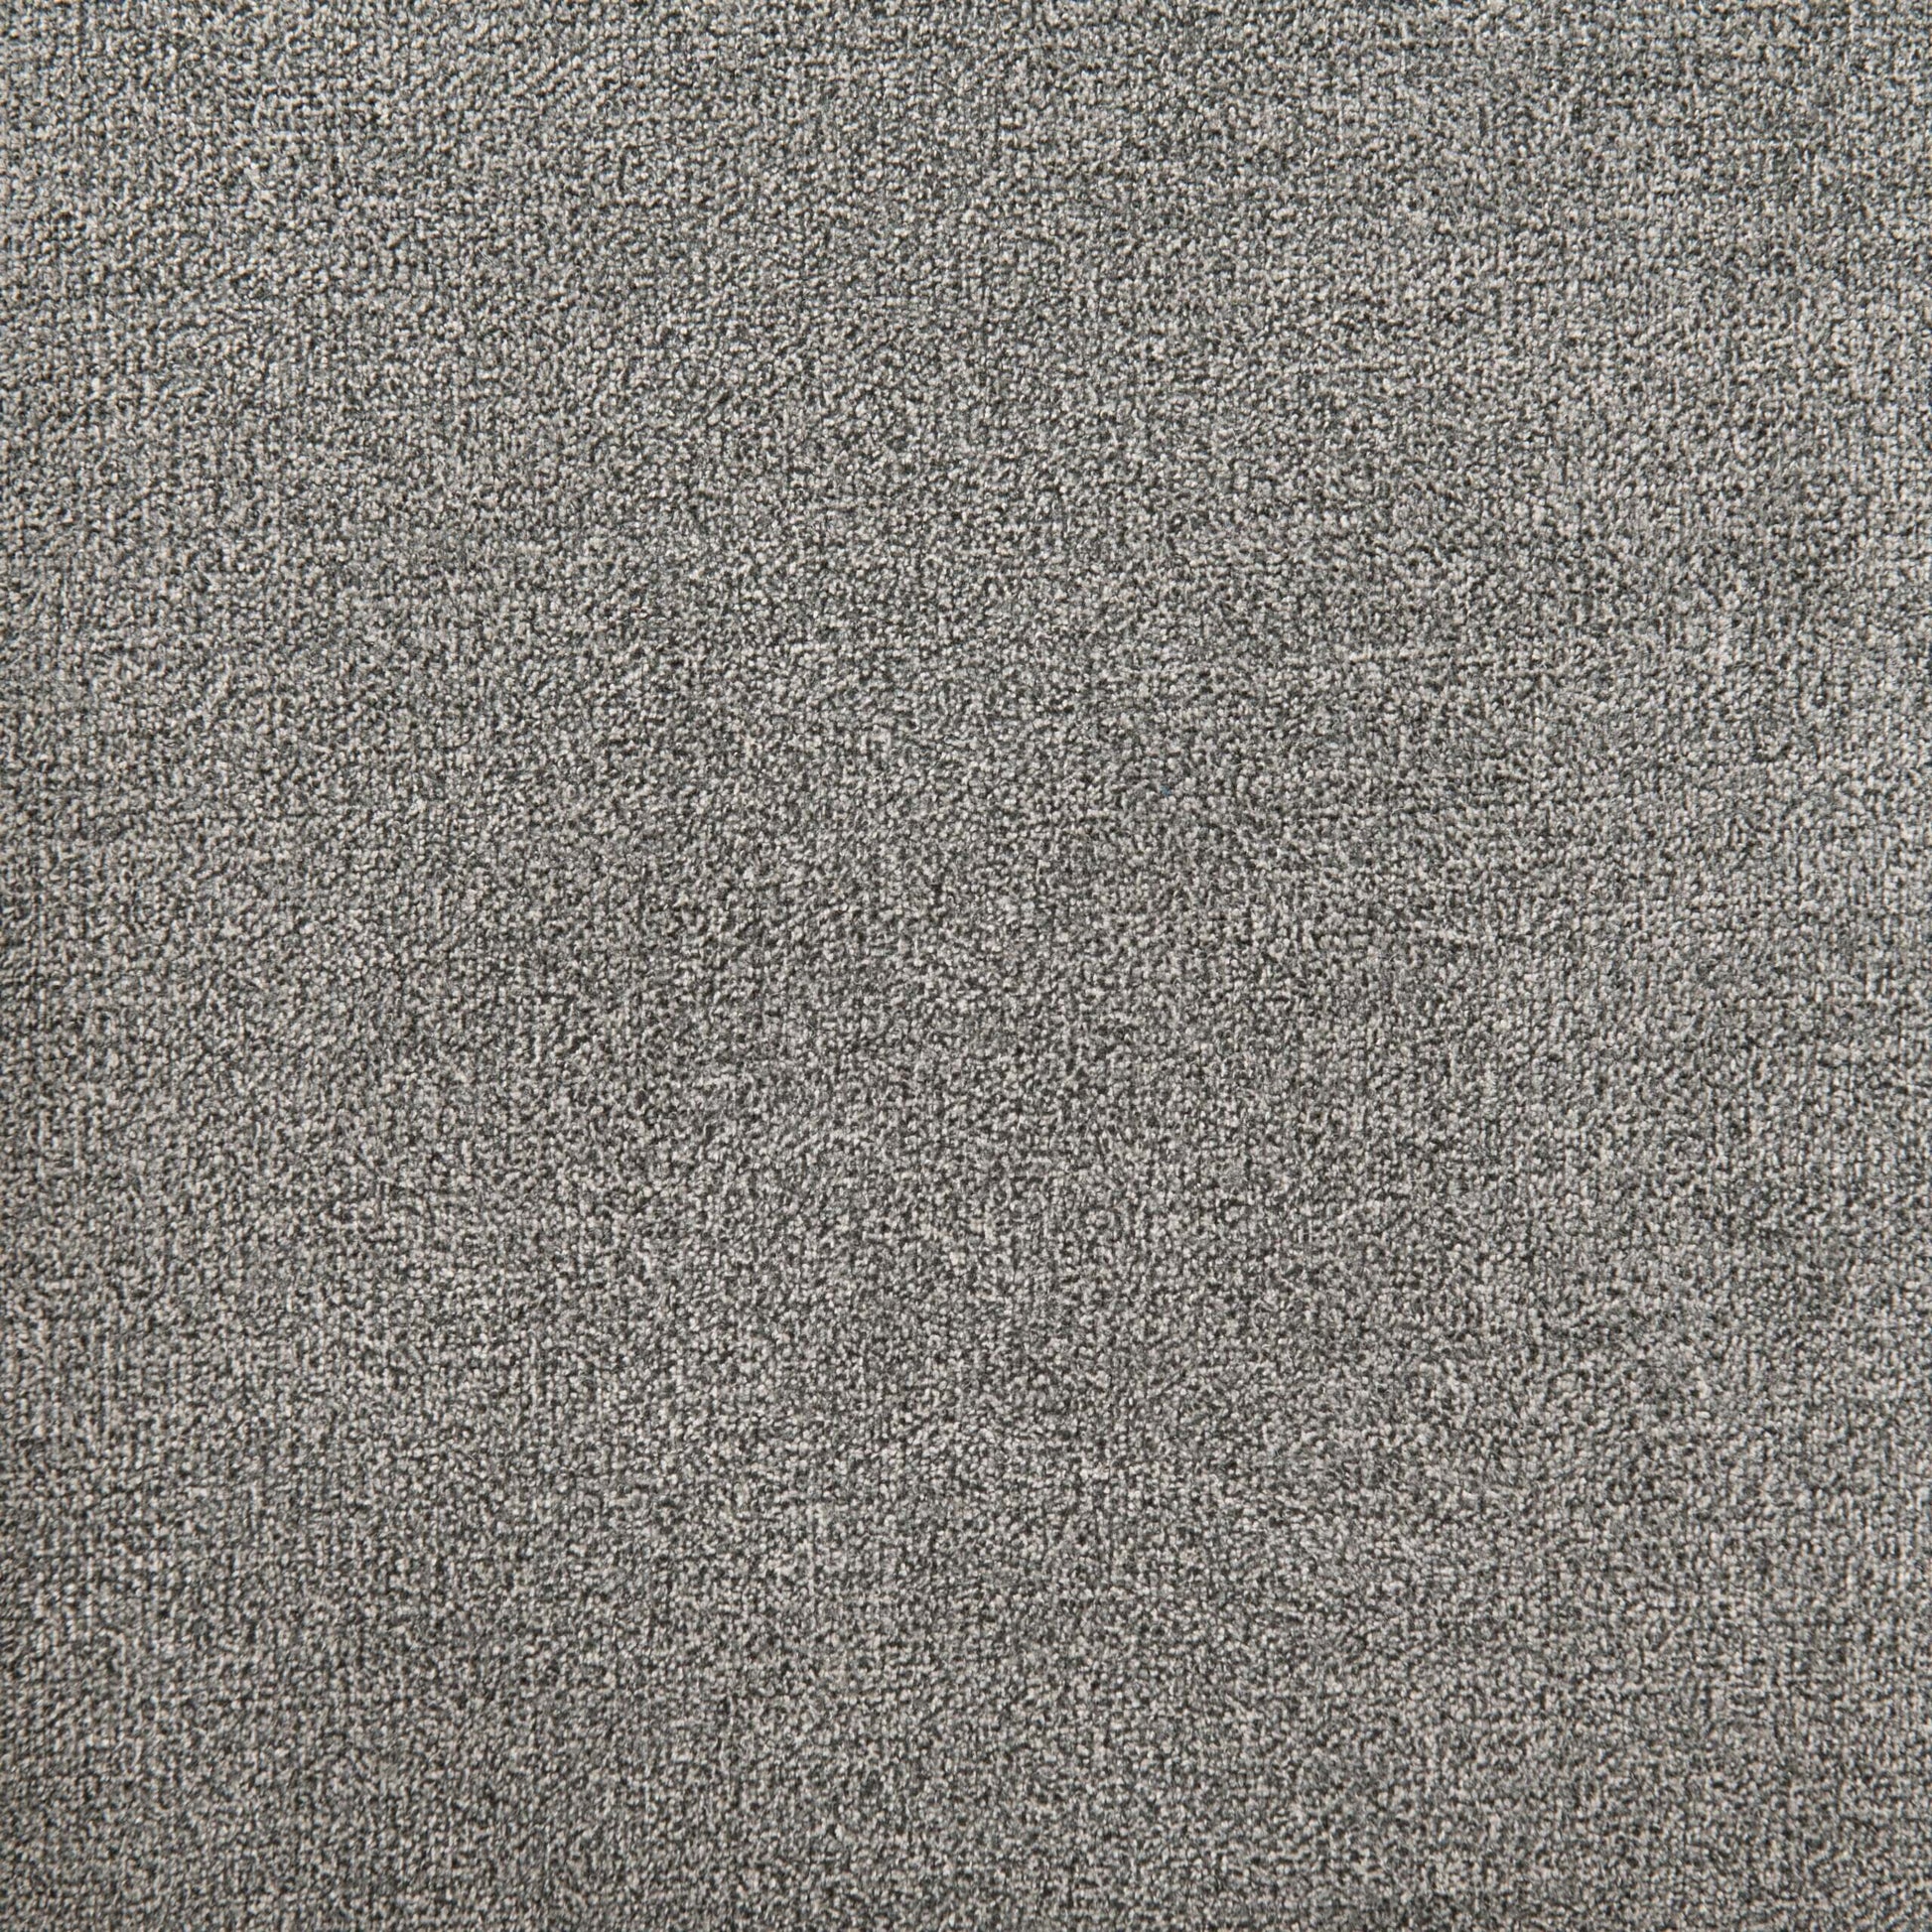 Amelia Storage Ottoman Dark Grey Fabric- The Right Buy Store